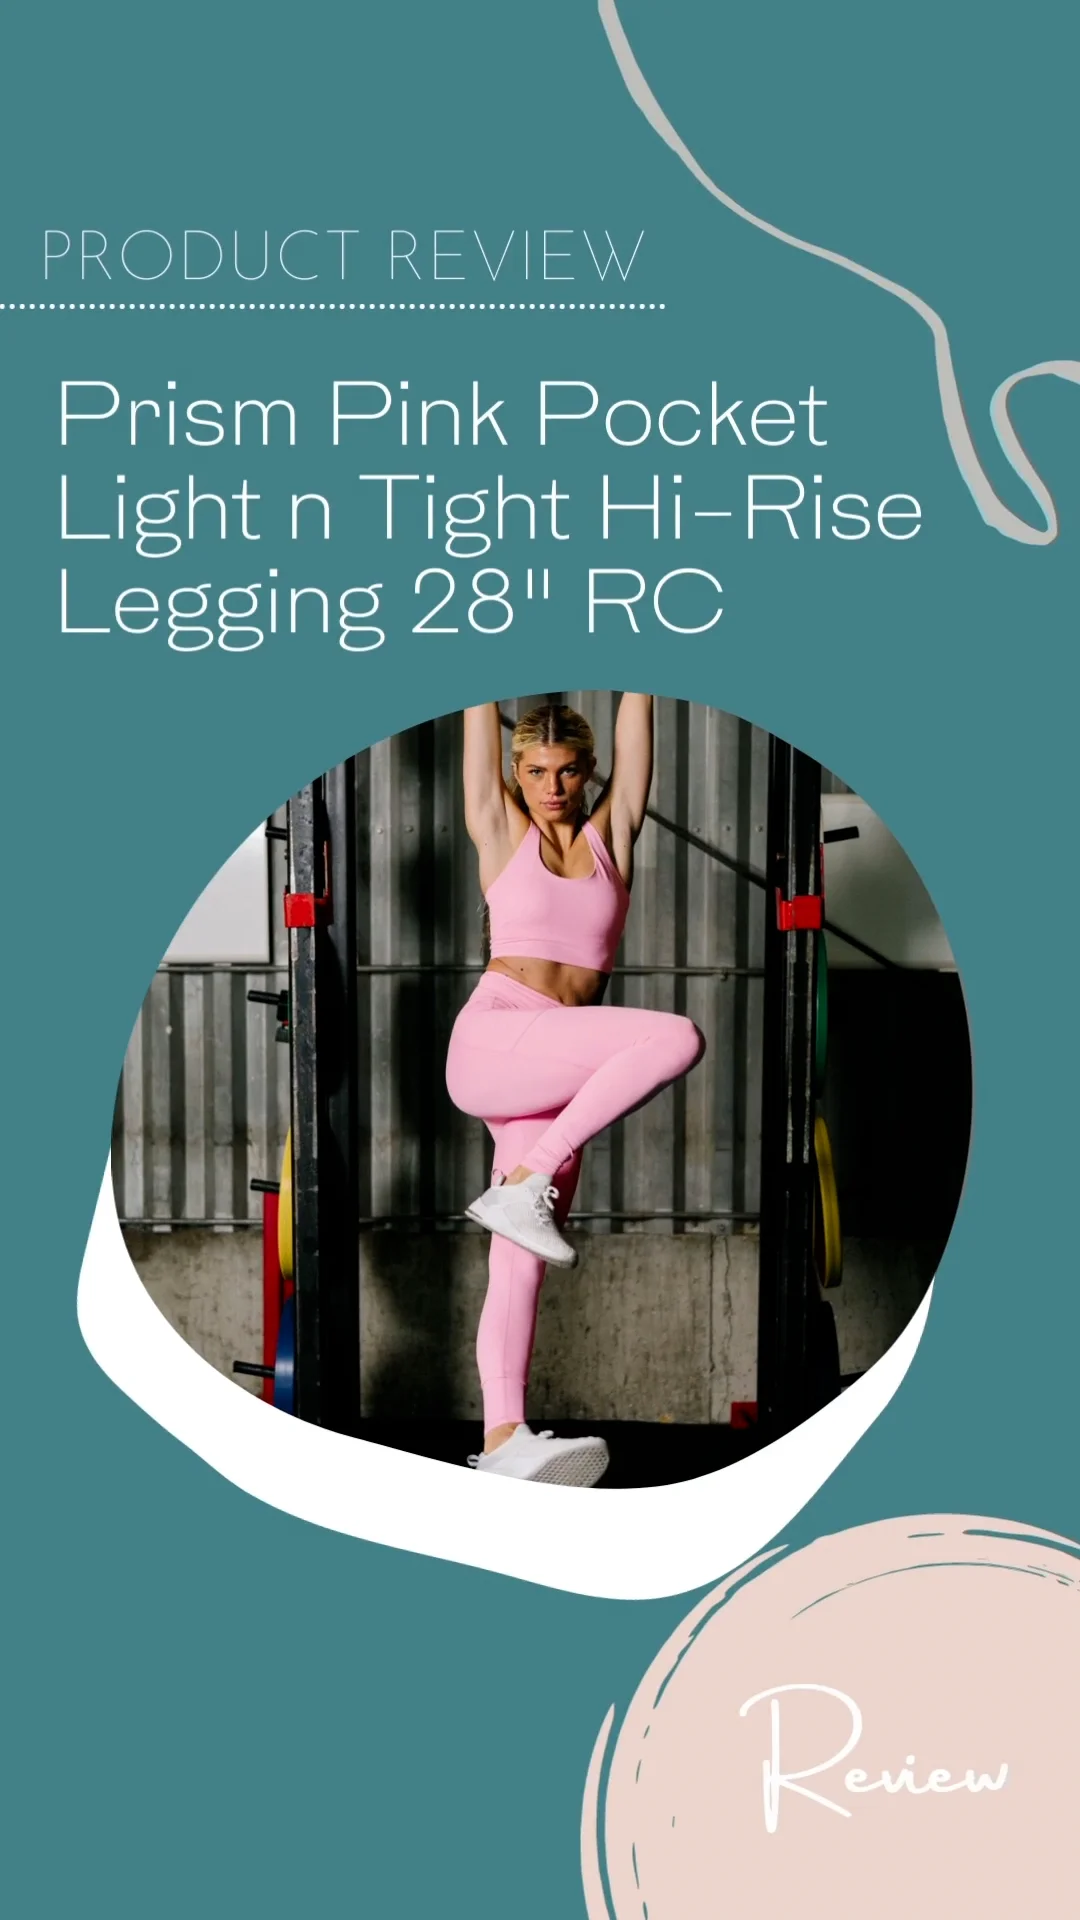 Prism Pink Pocket Light n Tight Hi-Rise Legging 28 RC #6095 on Vimeo